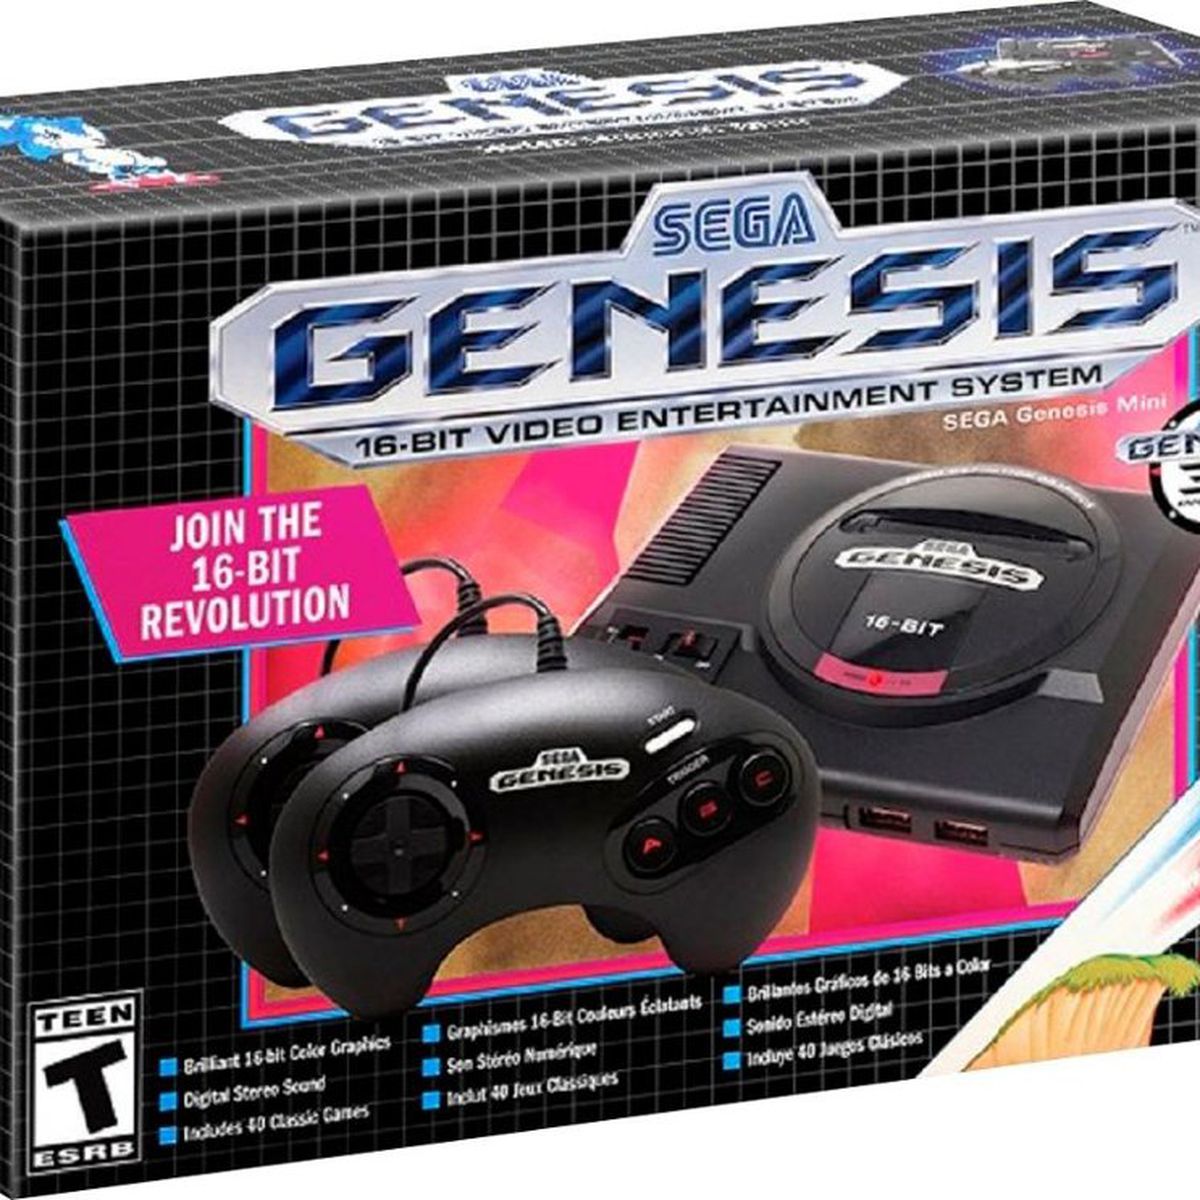 A product shot of the Sega Genesis Mini box